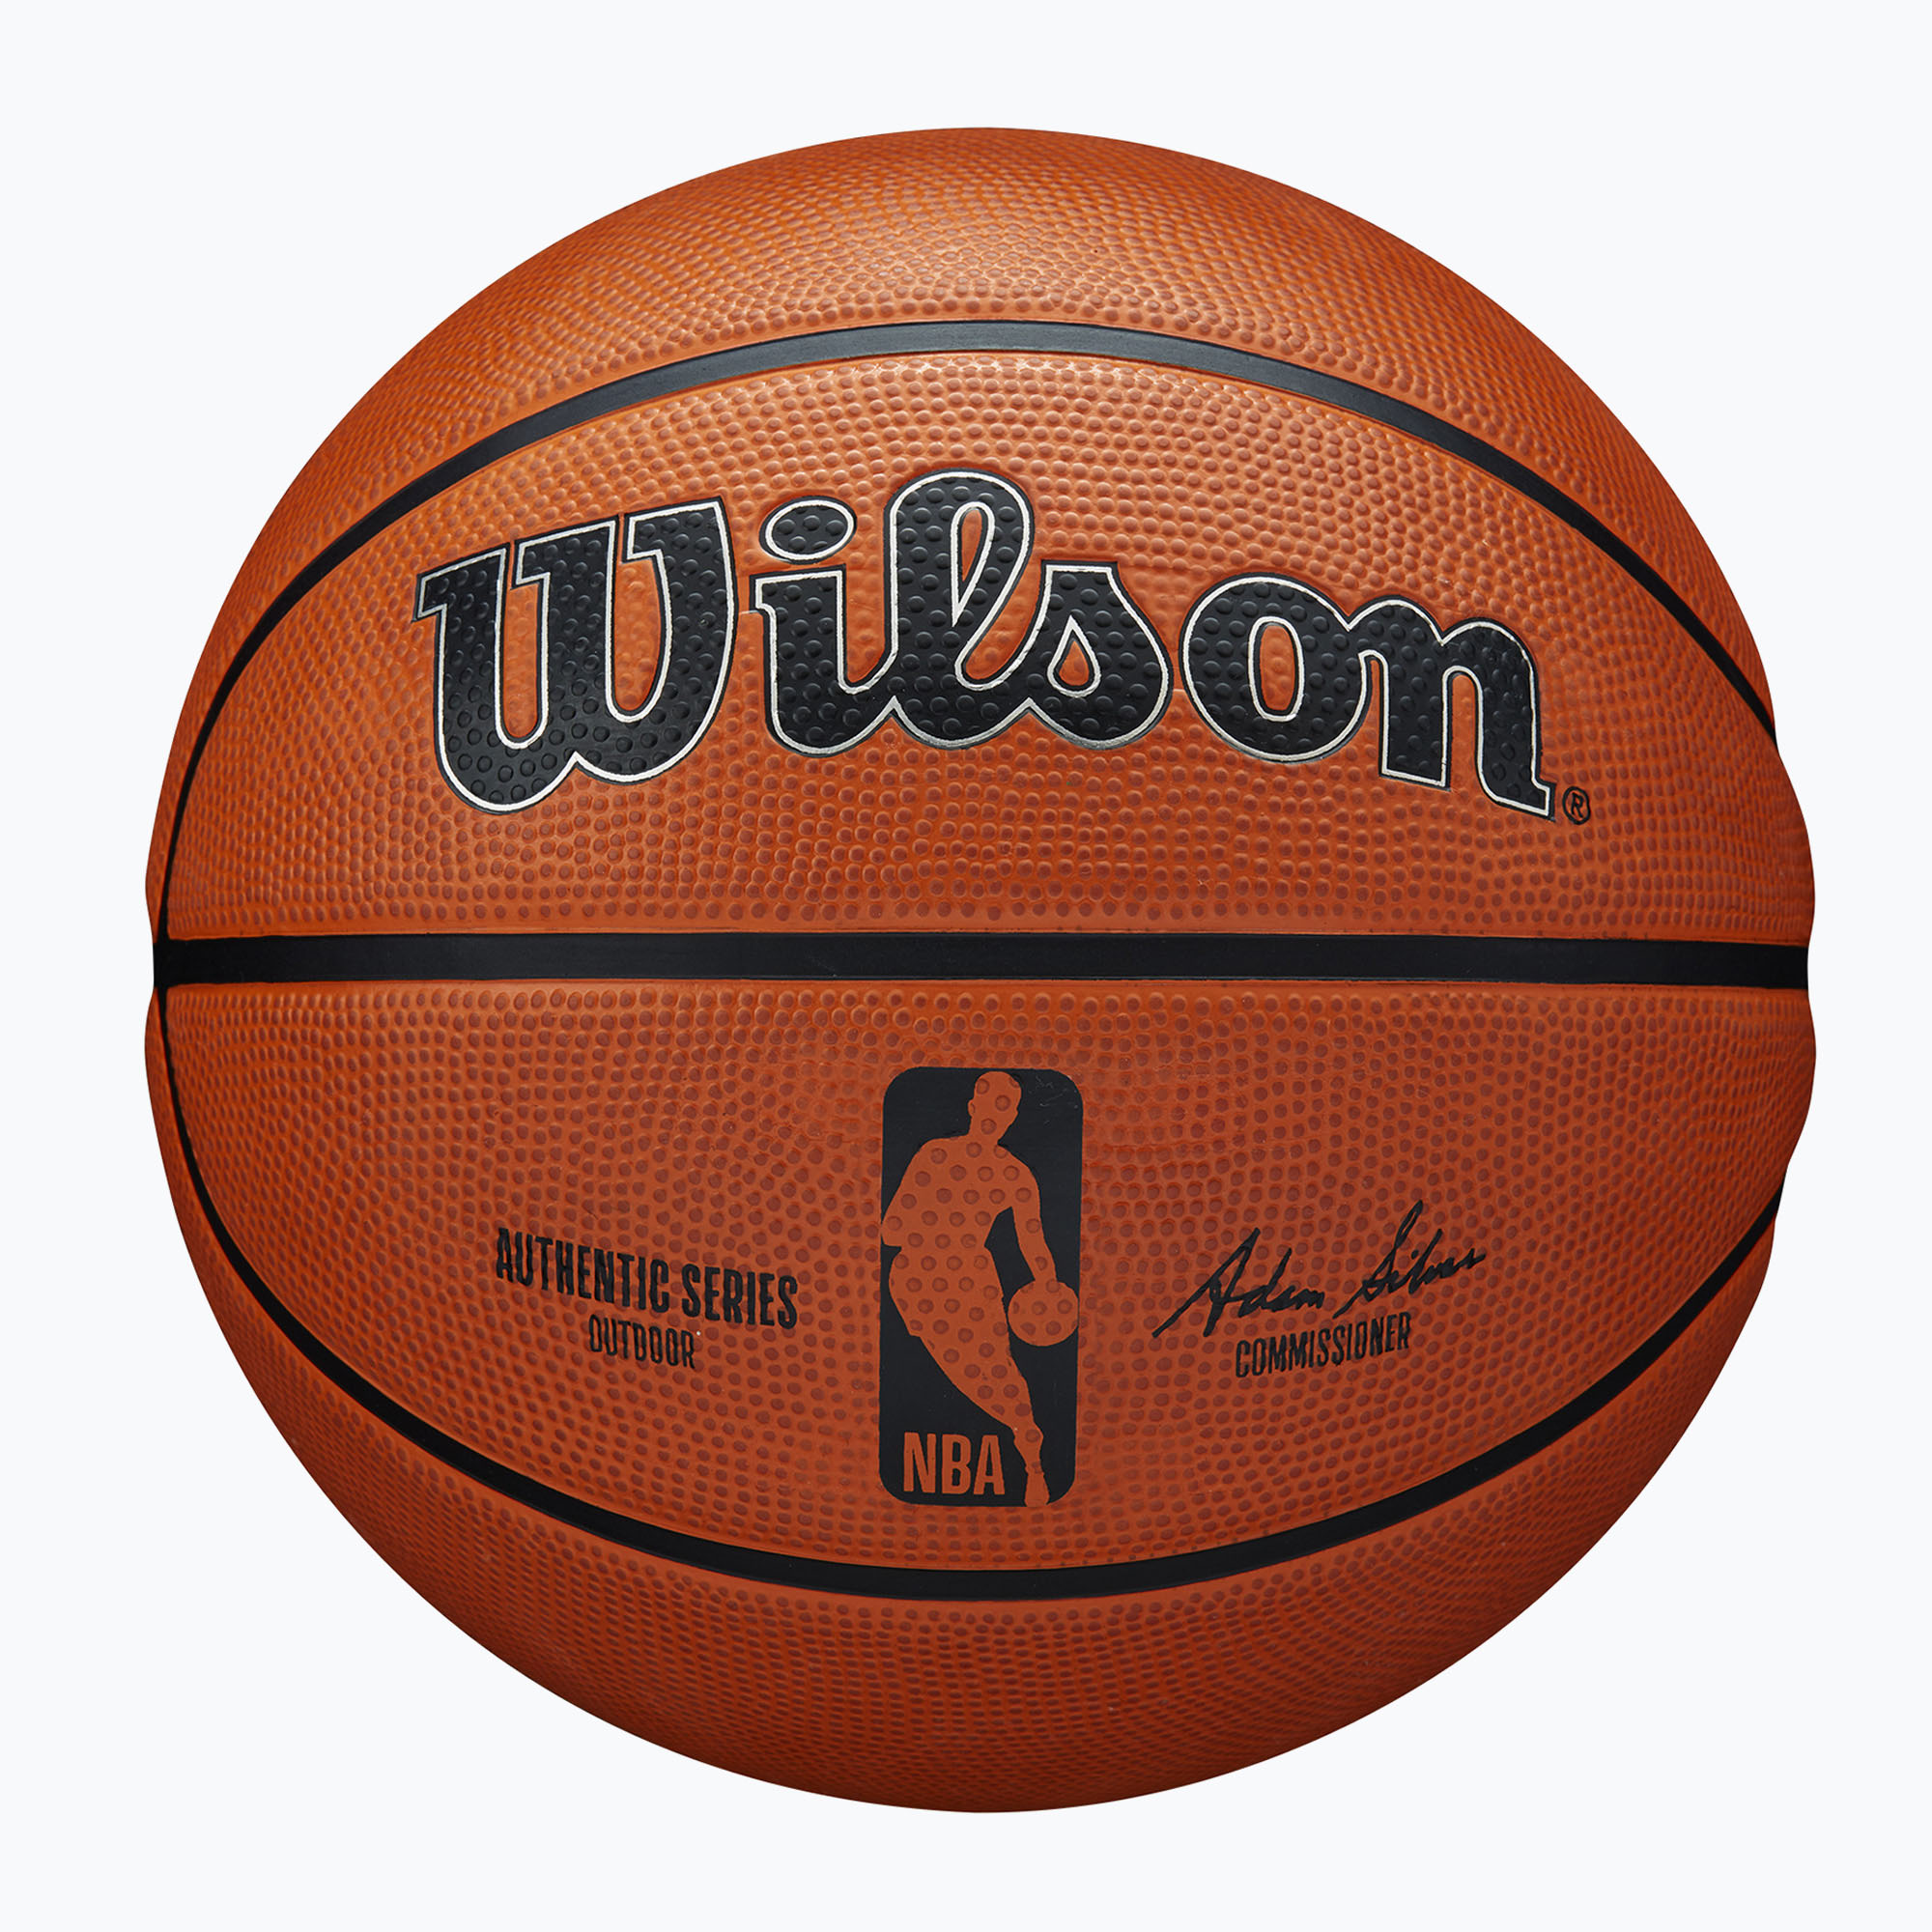 Wilson NBA Authentic Series Outdoor basketbal WTB7300XB06 veľkosť 6